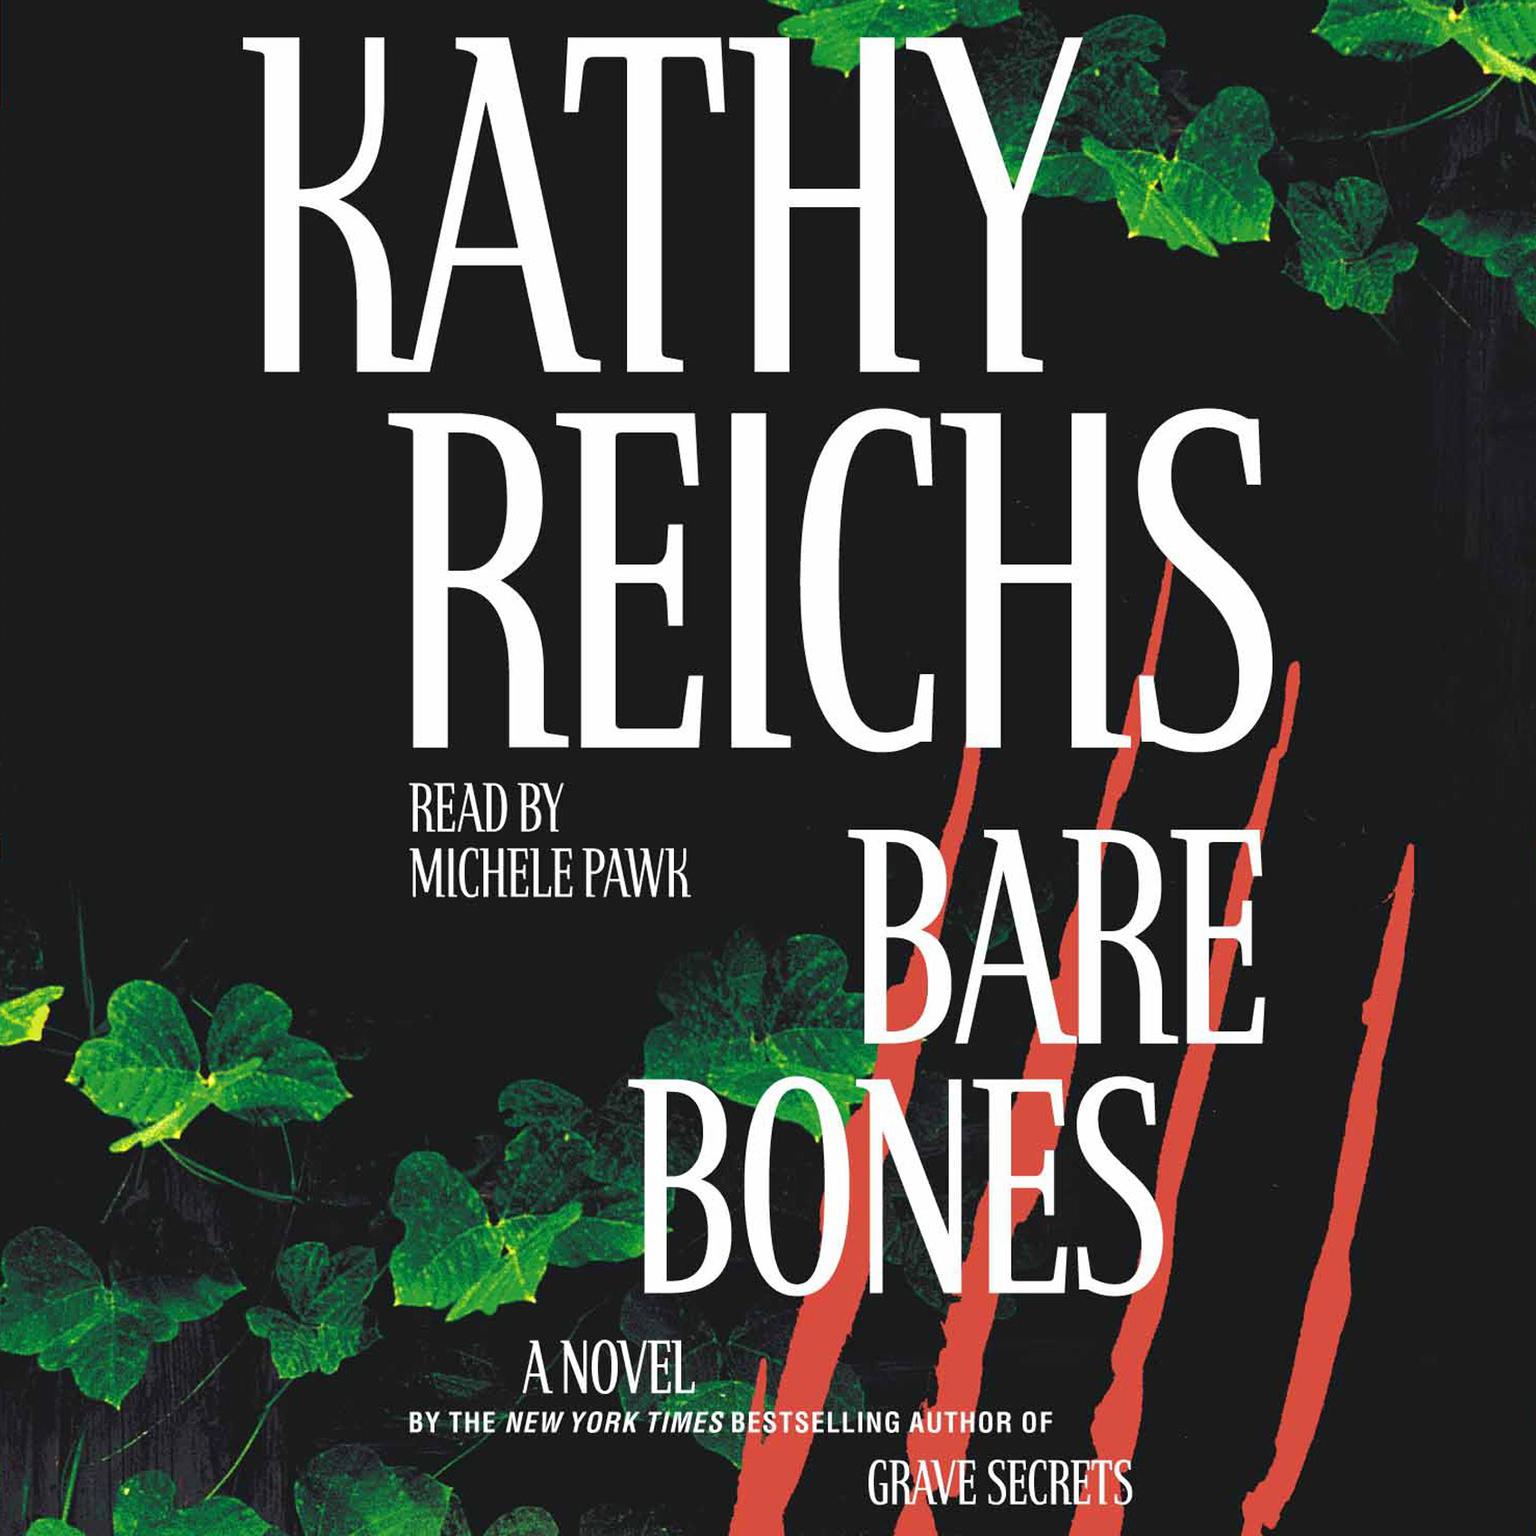 Bare Bones: A Novel Audiobook, by Kathy Reichs